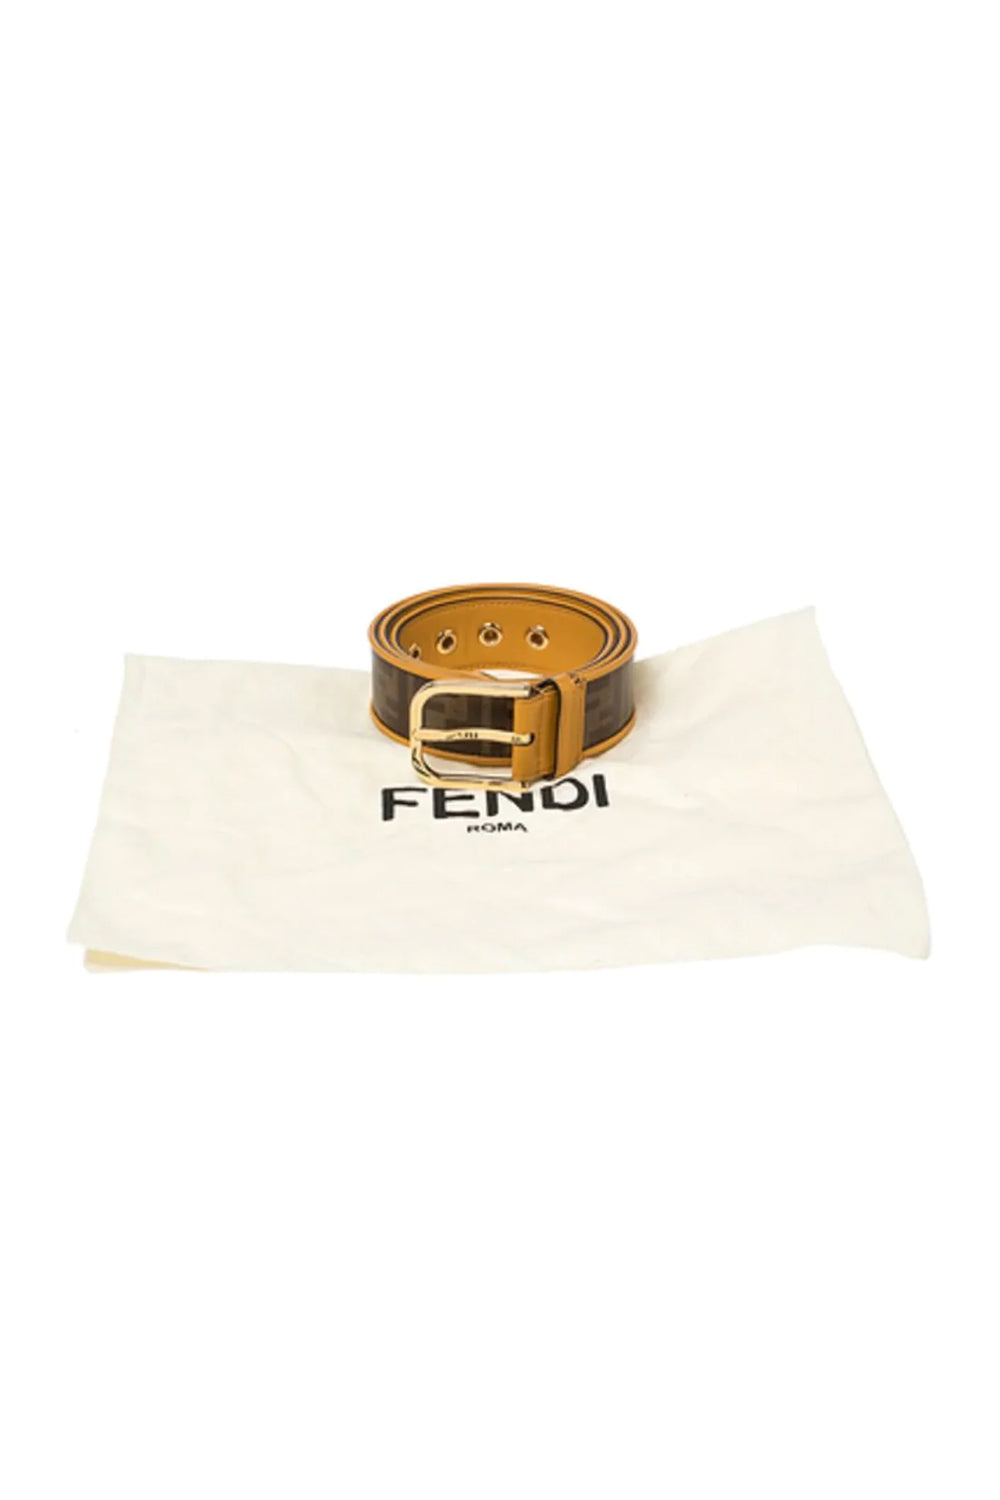 Fendi FF Logo Zucca Brown Yellow Leather Trim Belt